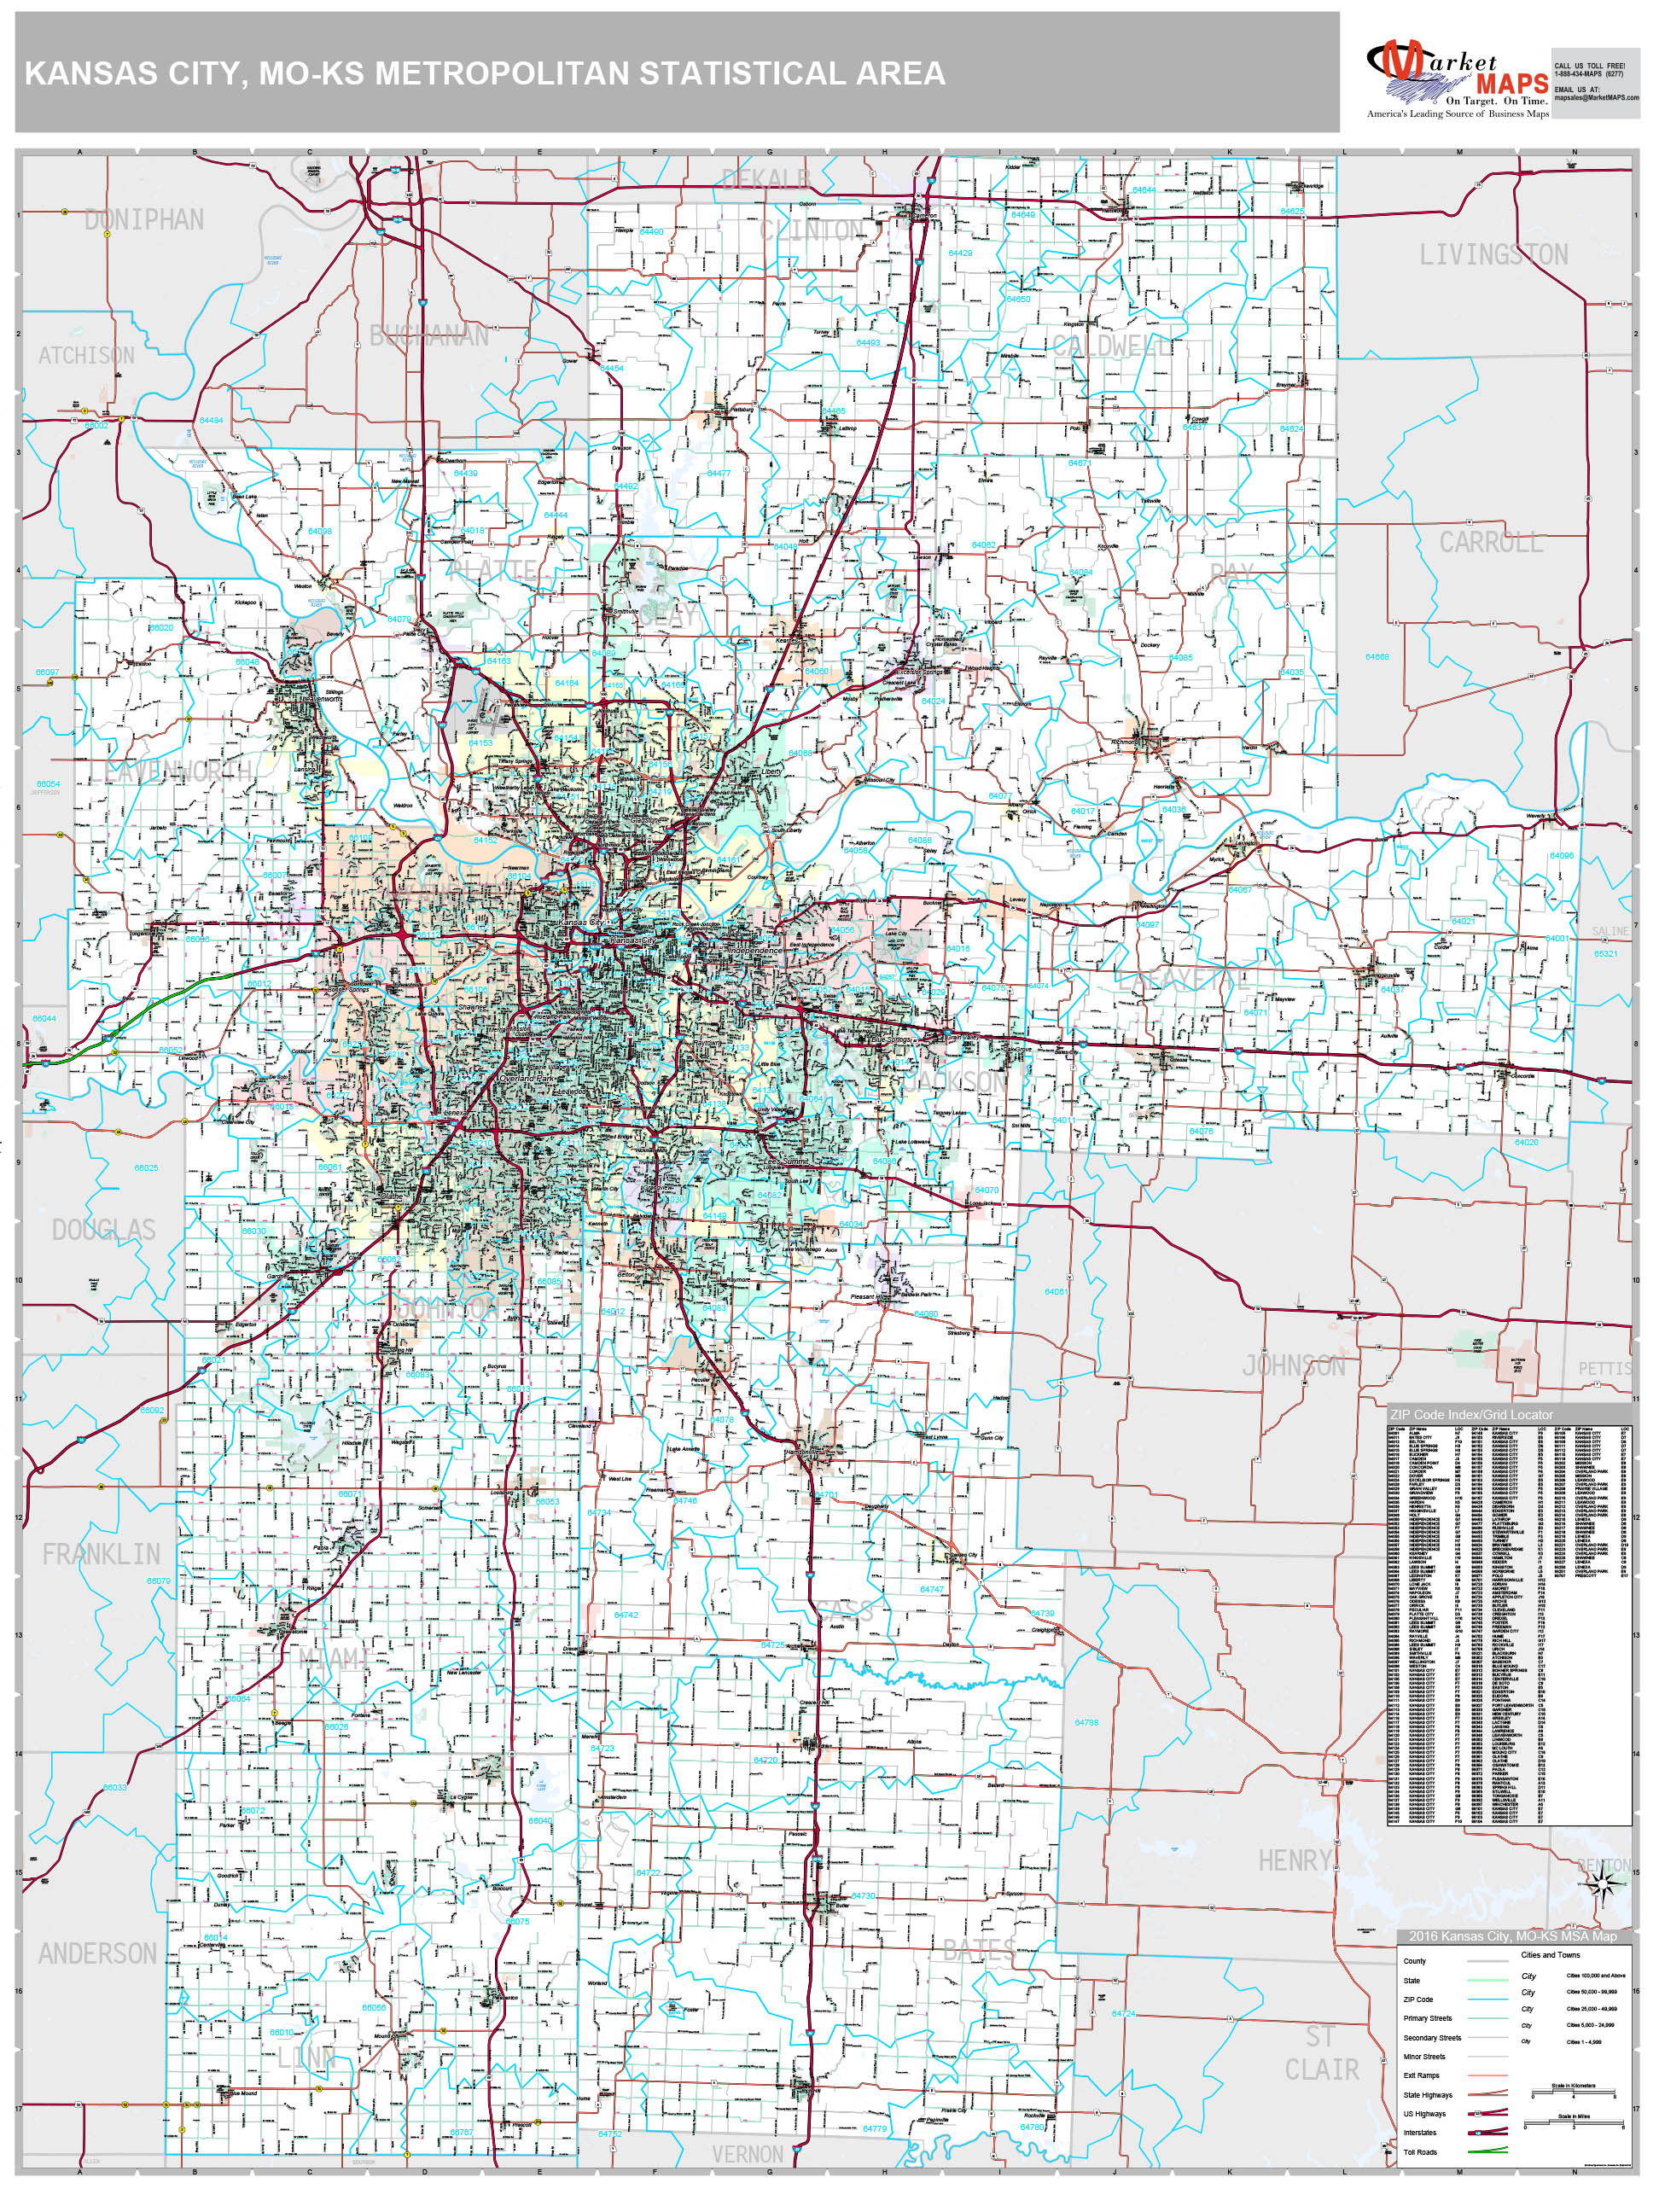 Kansas City, MO Metro Area Wall Map Premium Style by MarketMAPS